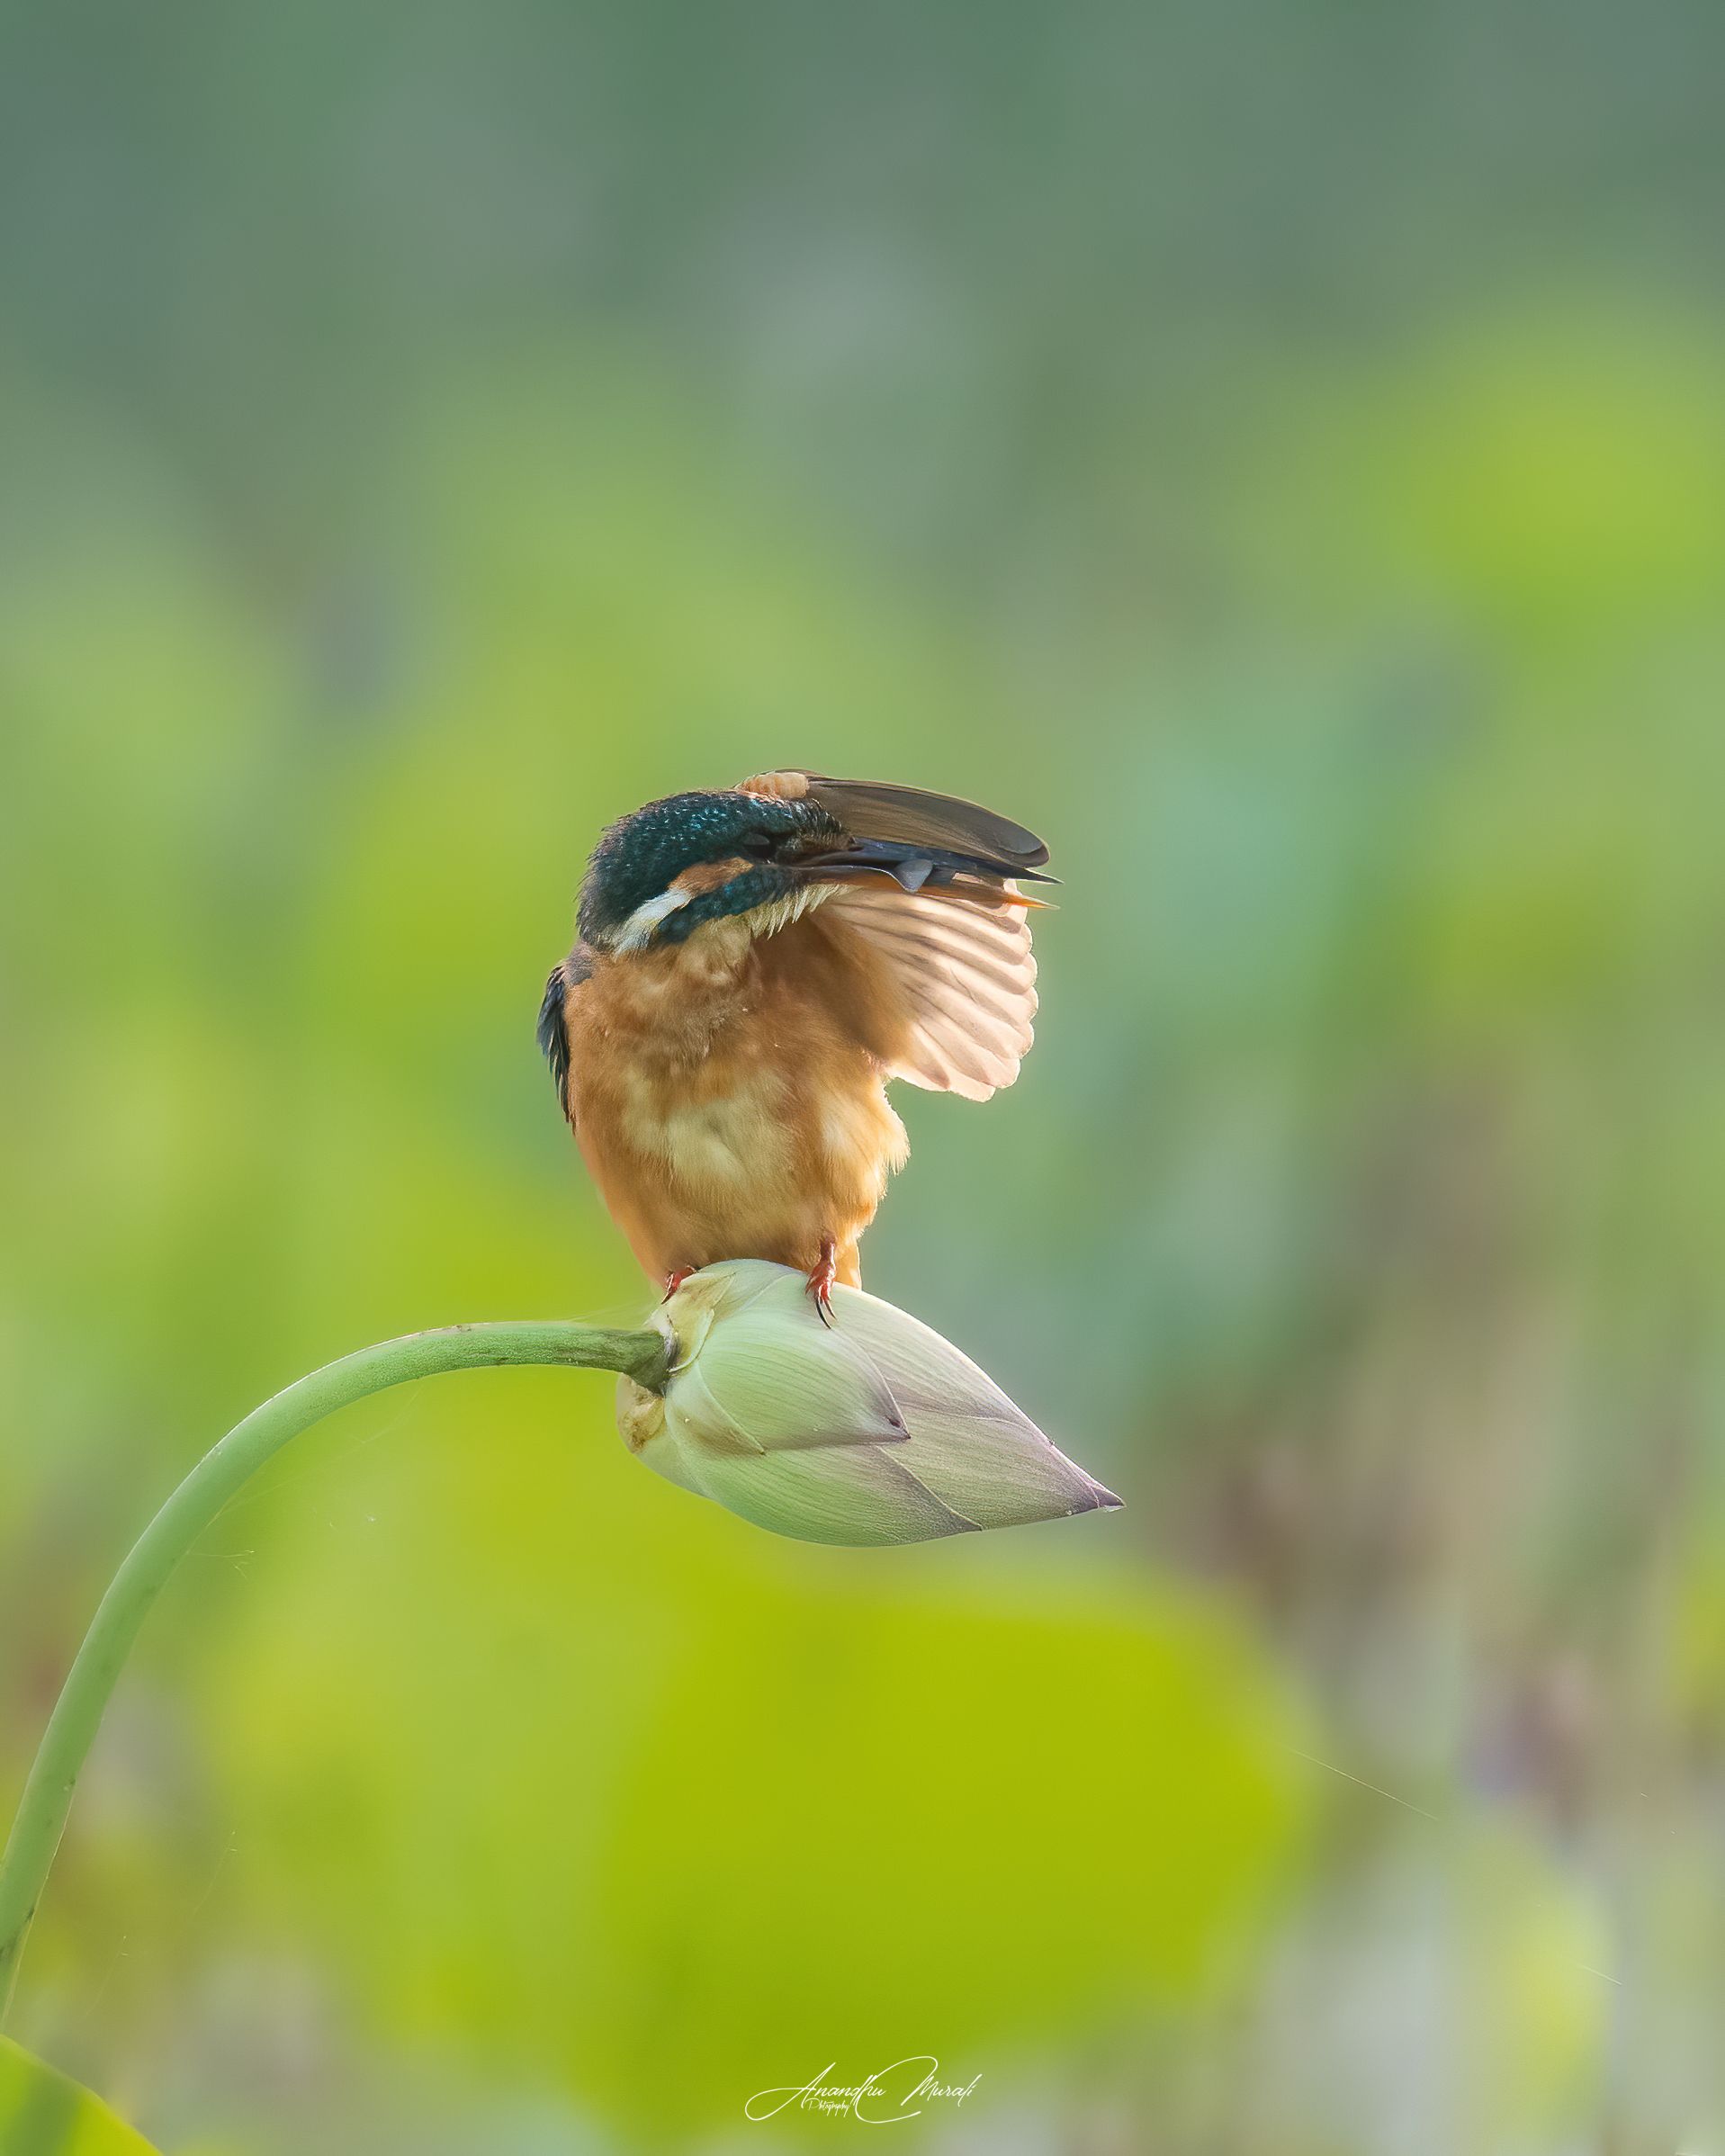 Kerala,India,Birds,Nikon, Anandhu M